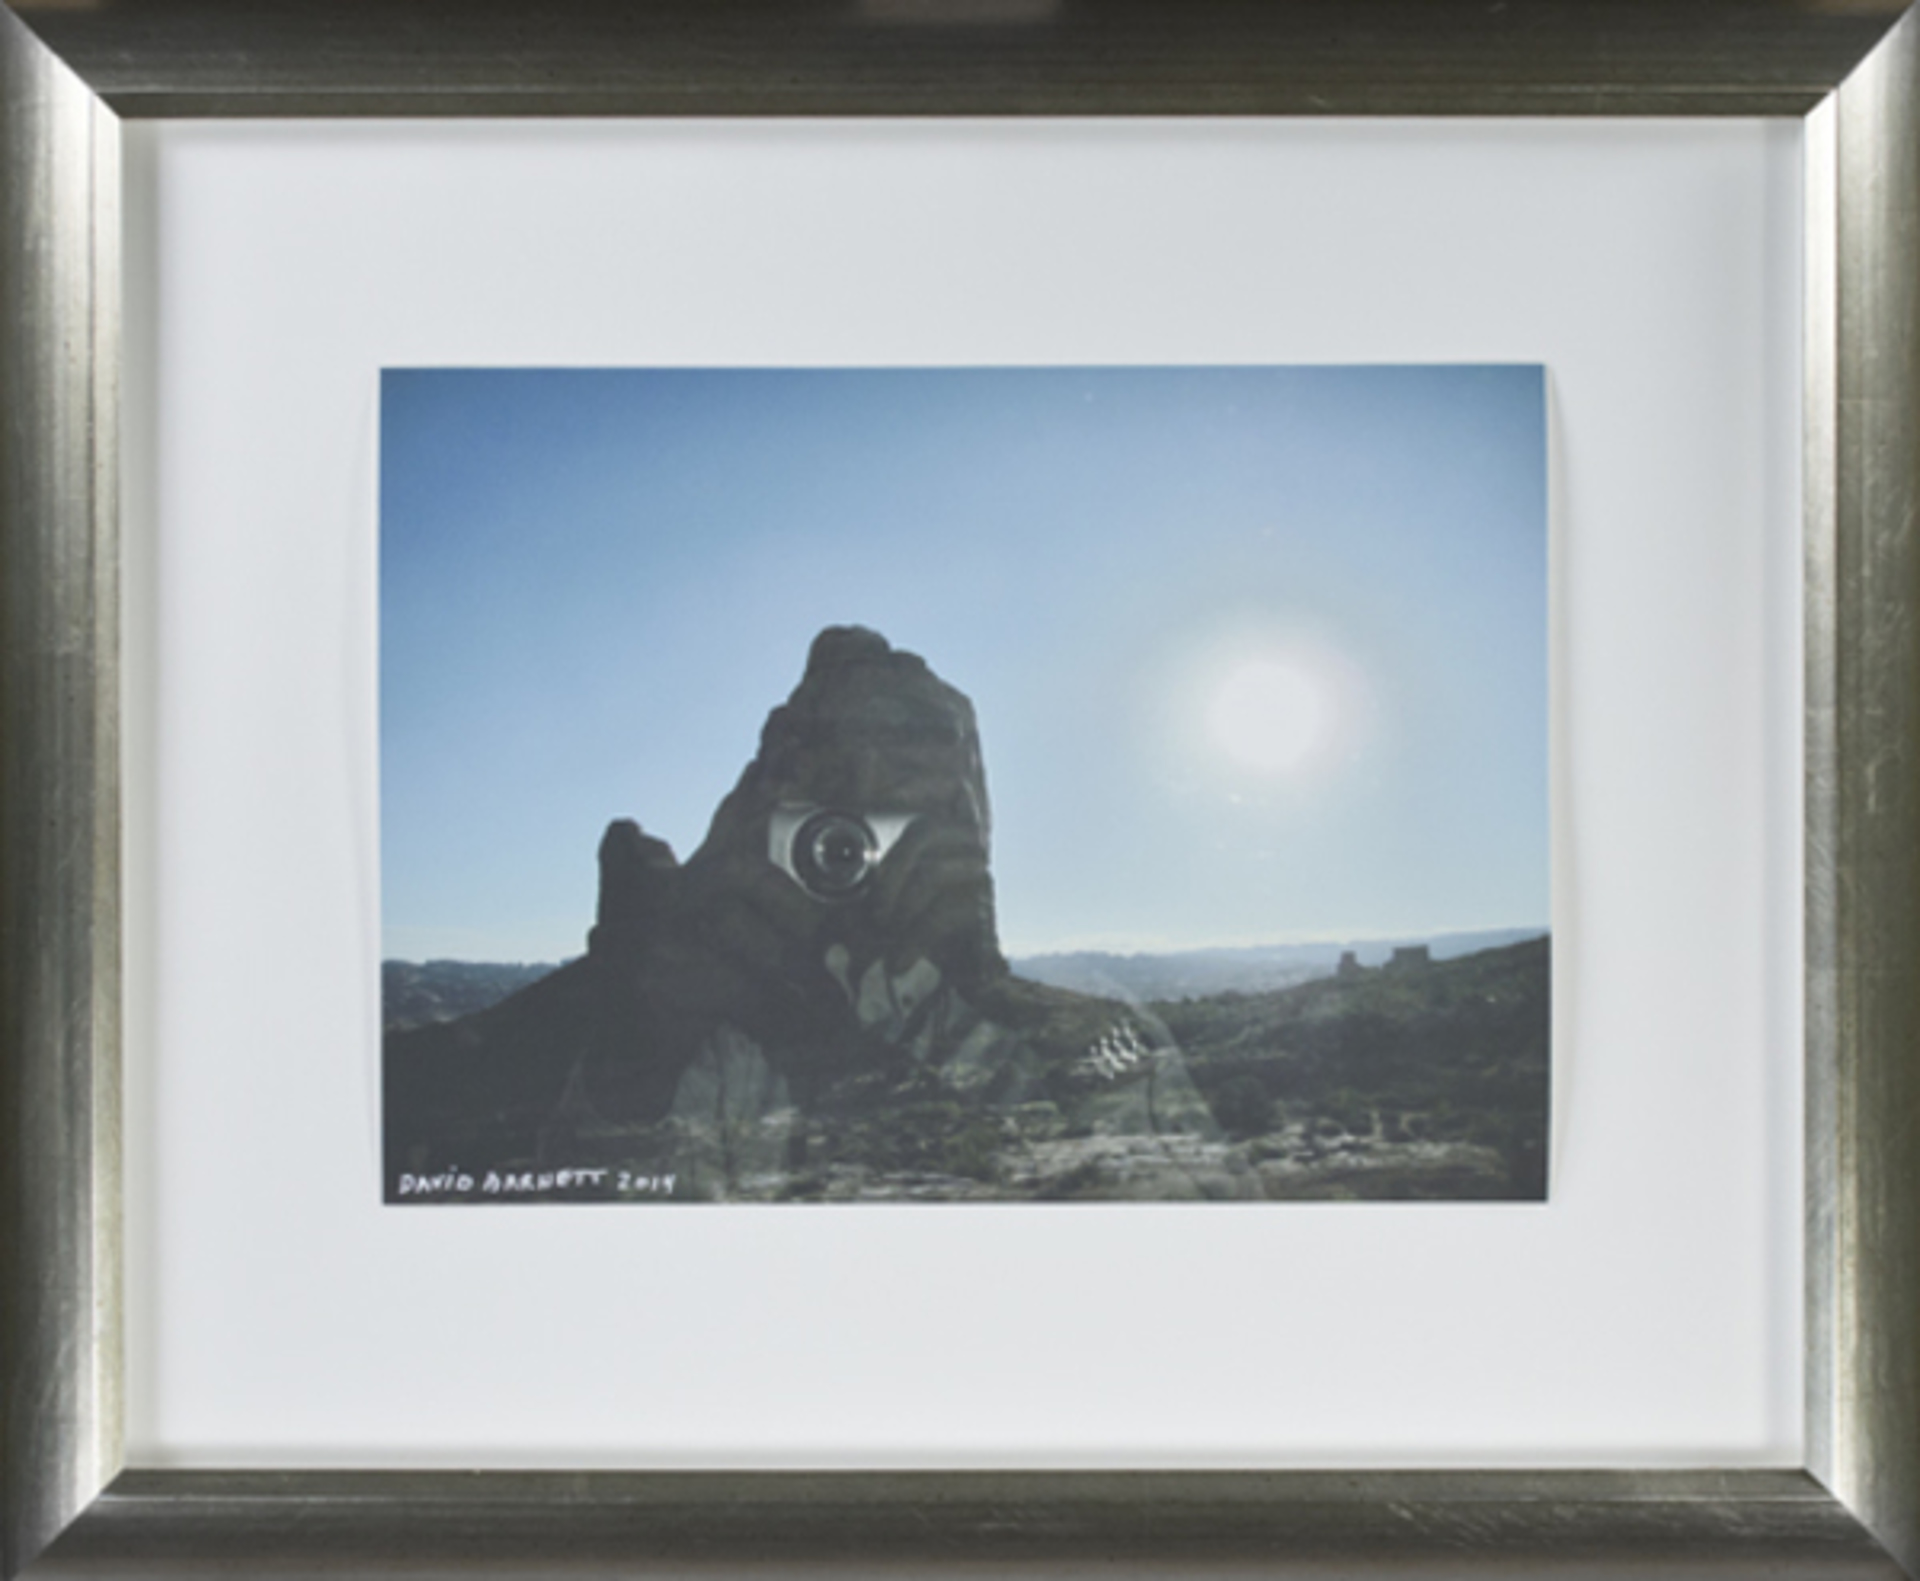 Surreal Reflection - Arches National Park, Moab, Utah by David Barnett